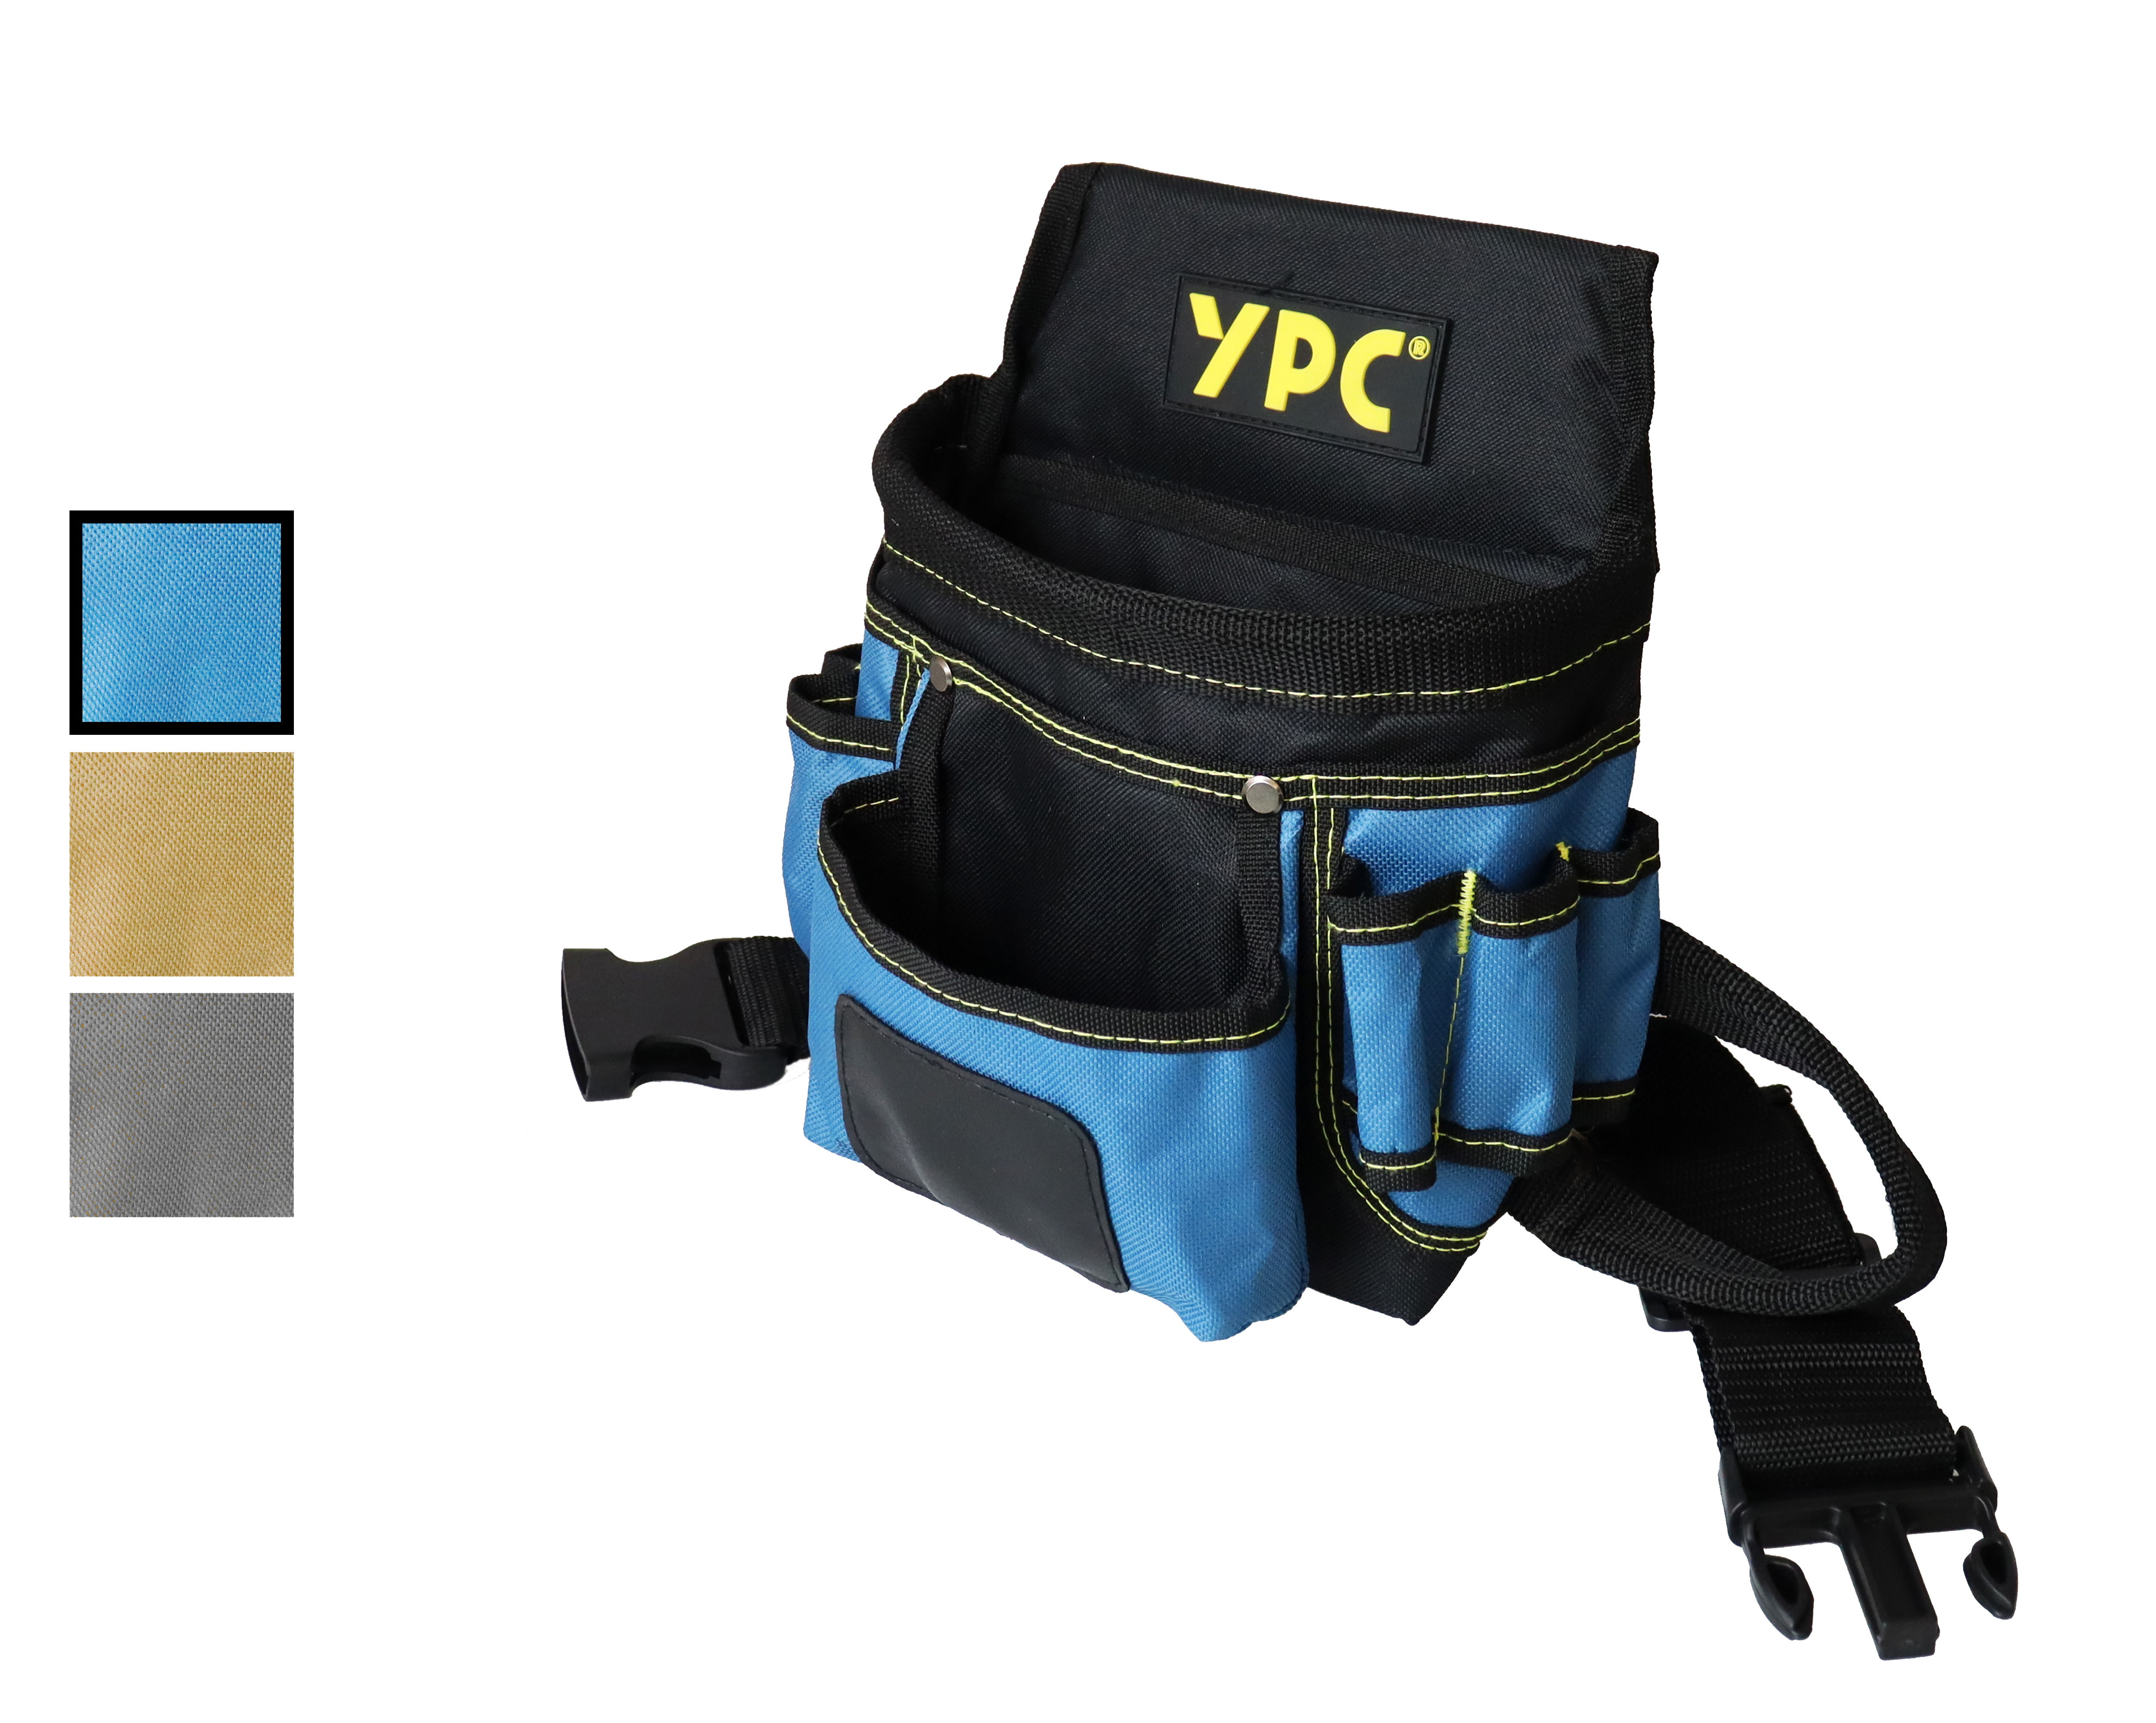 "Presto" belt bag XL, blue-black, 27x21x13cm, 5 kg load capacity